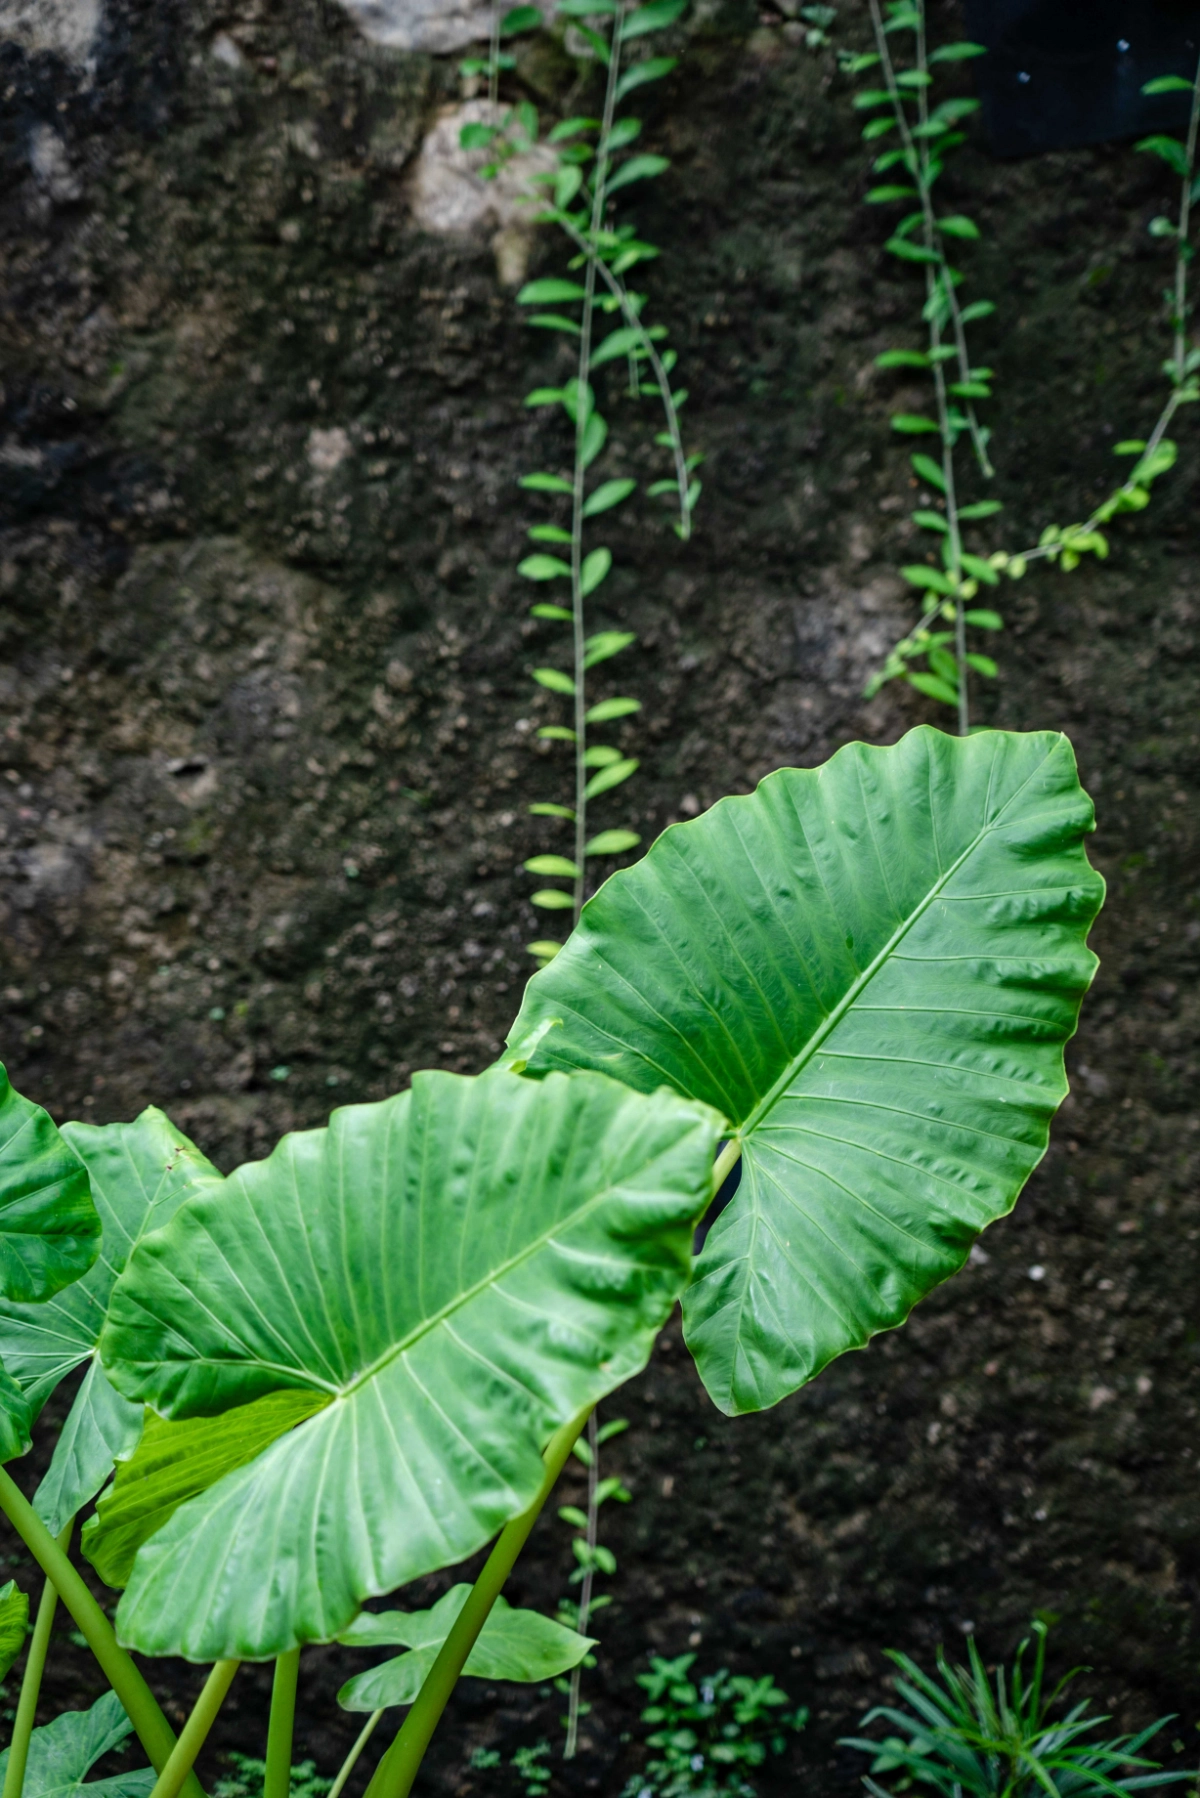 alocasia wentii pflanze im garten elephantenpflanze blaetter